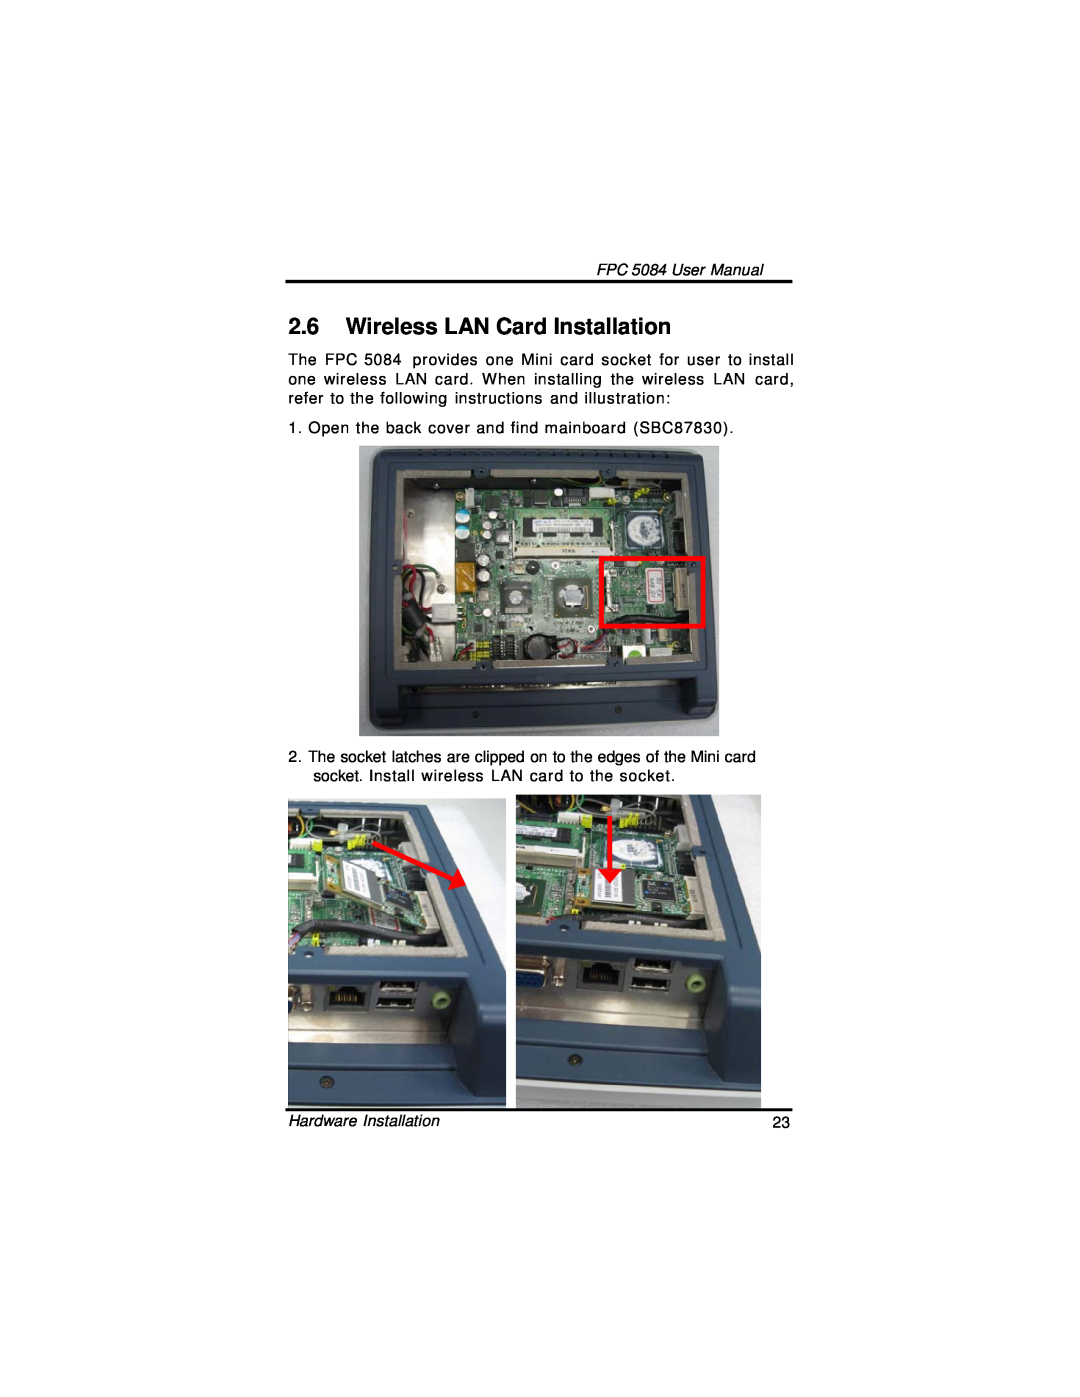 Intel N270, FPC 5084 user manual Wireless LAN Card Installation 